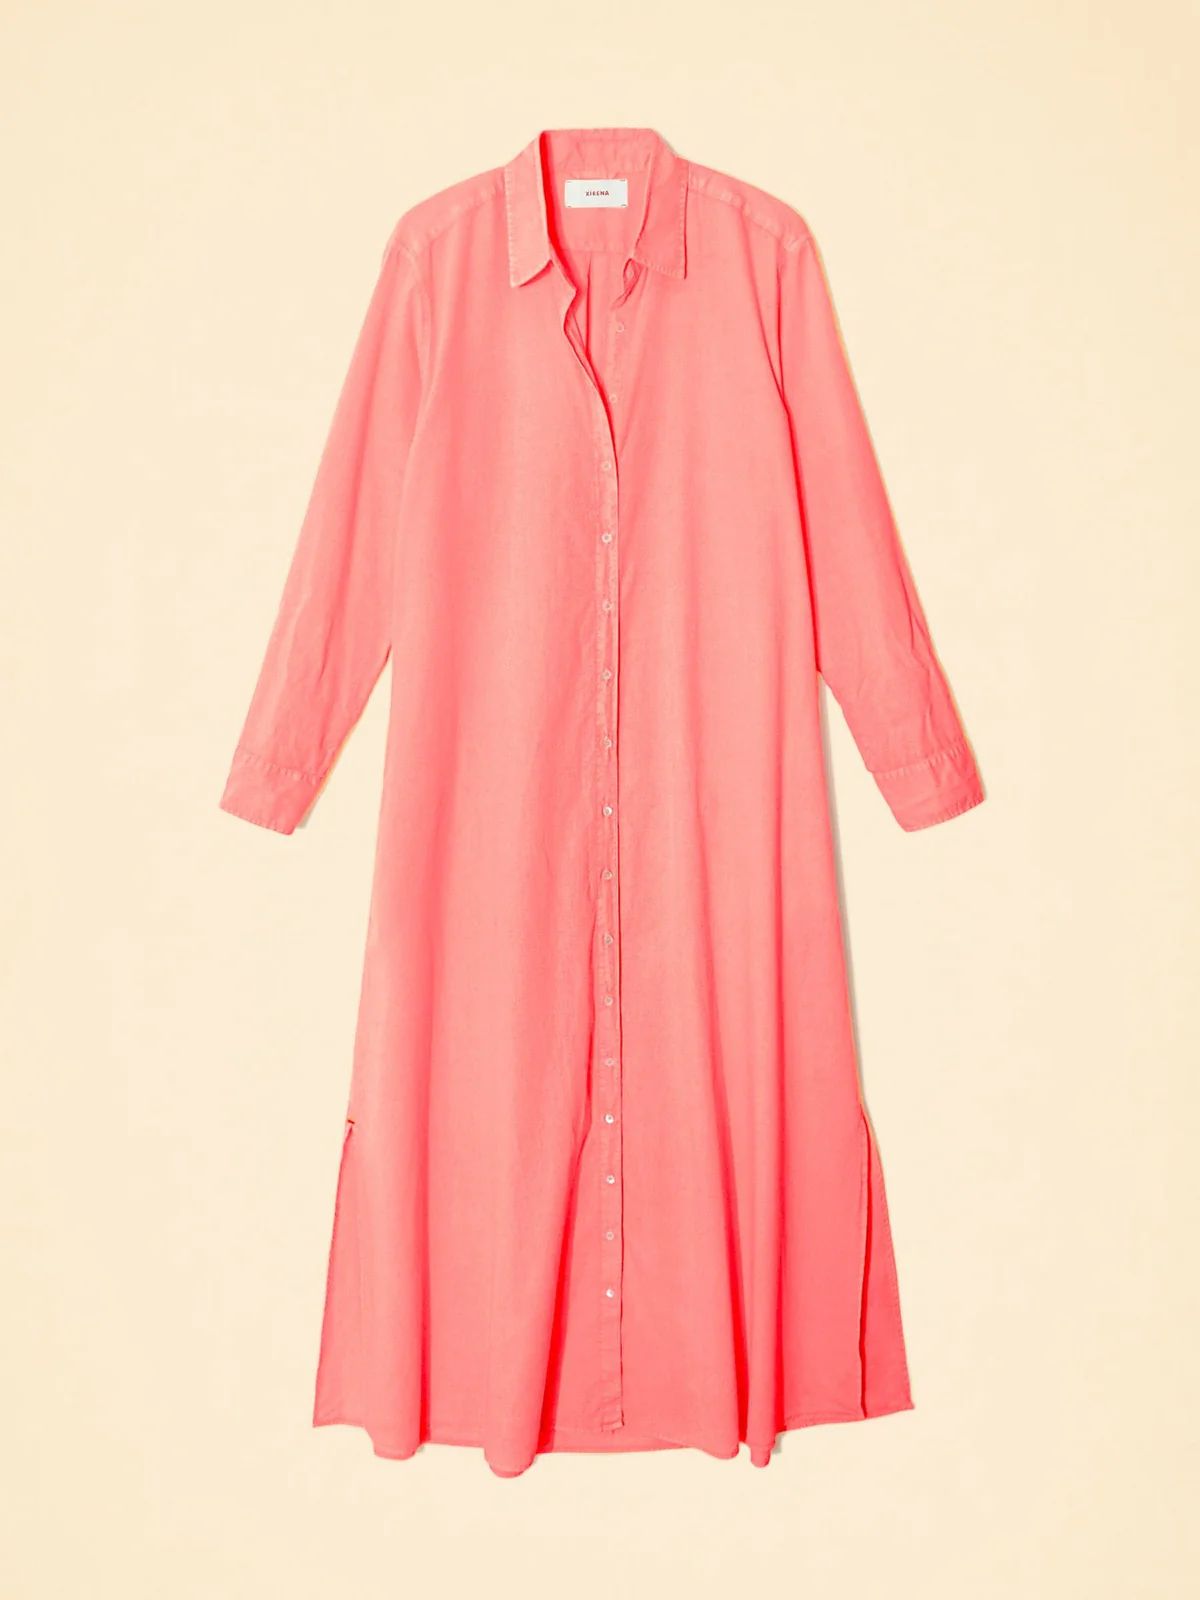 Neon Pink Boden Dress | Xirena